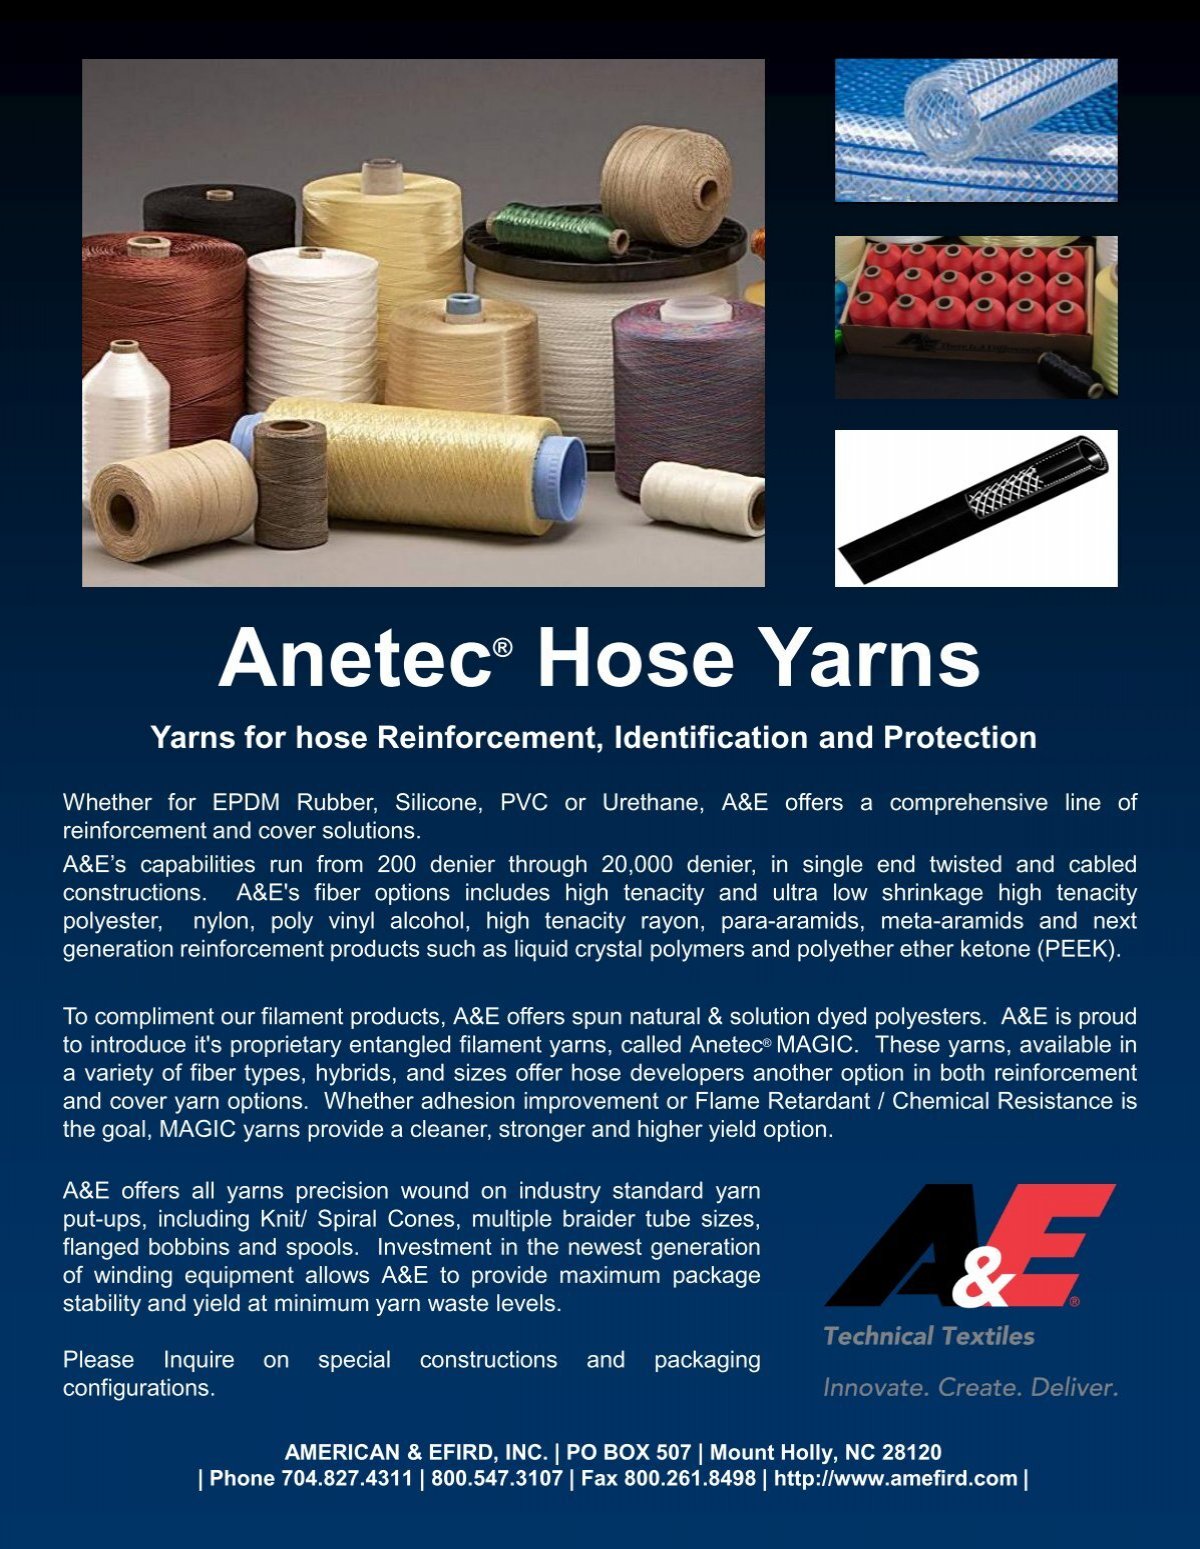 Download Hose Yarns Flyer (pdf) - American & Efird, Inc